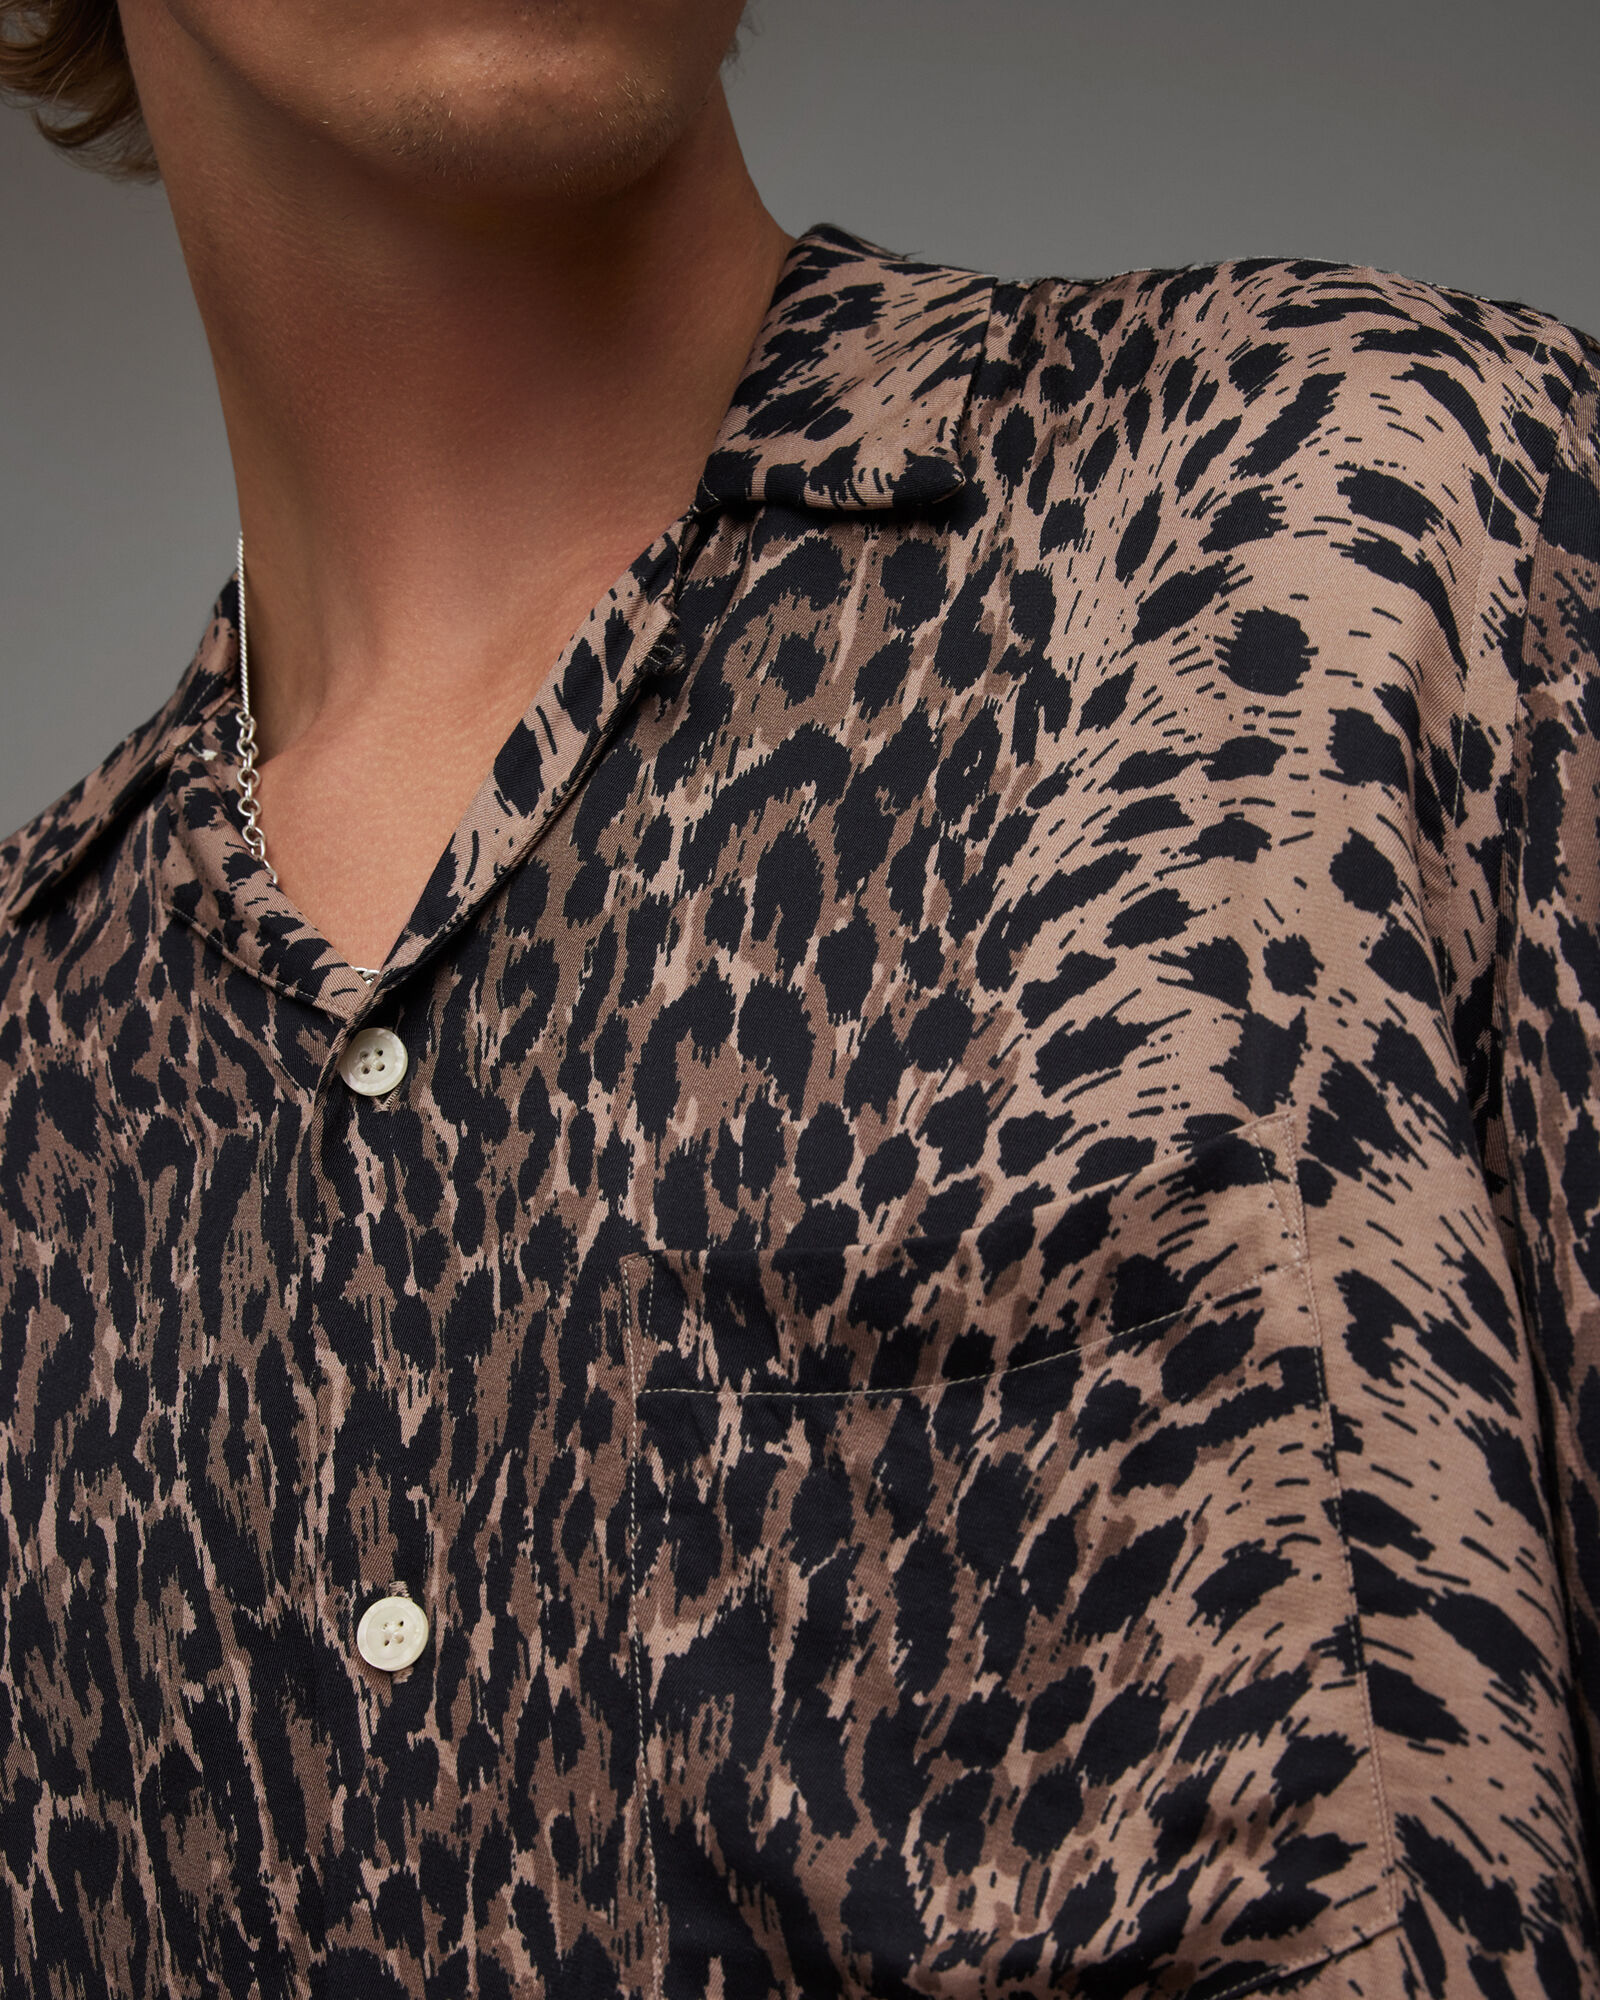 Leoza Leopard Print Relaxed Fit Shirt